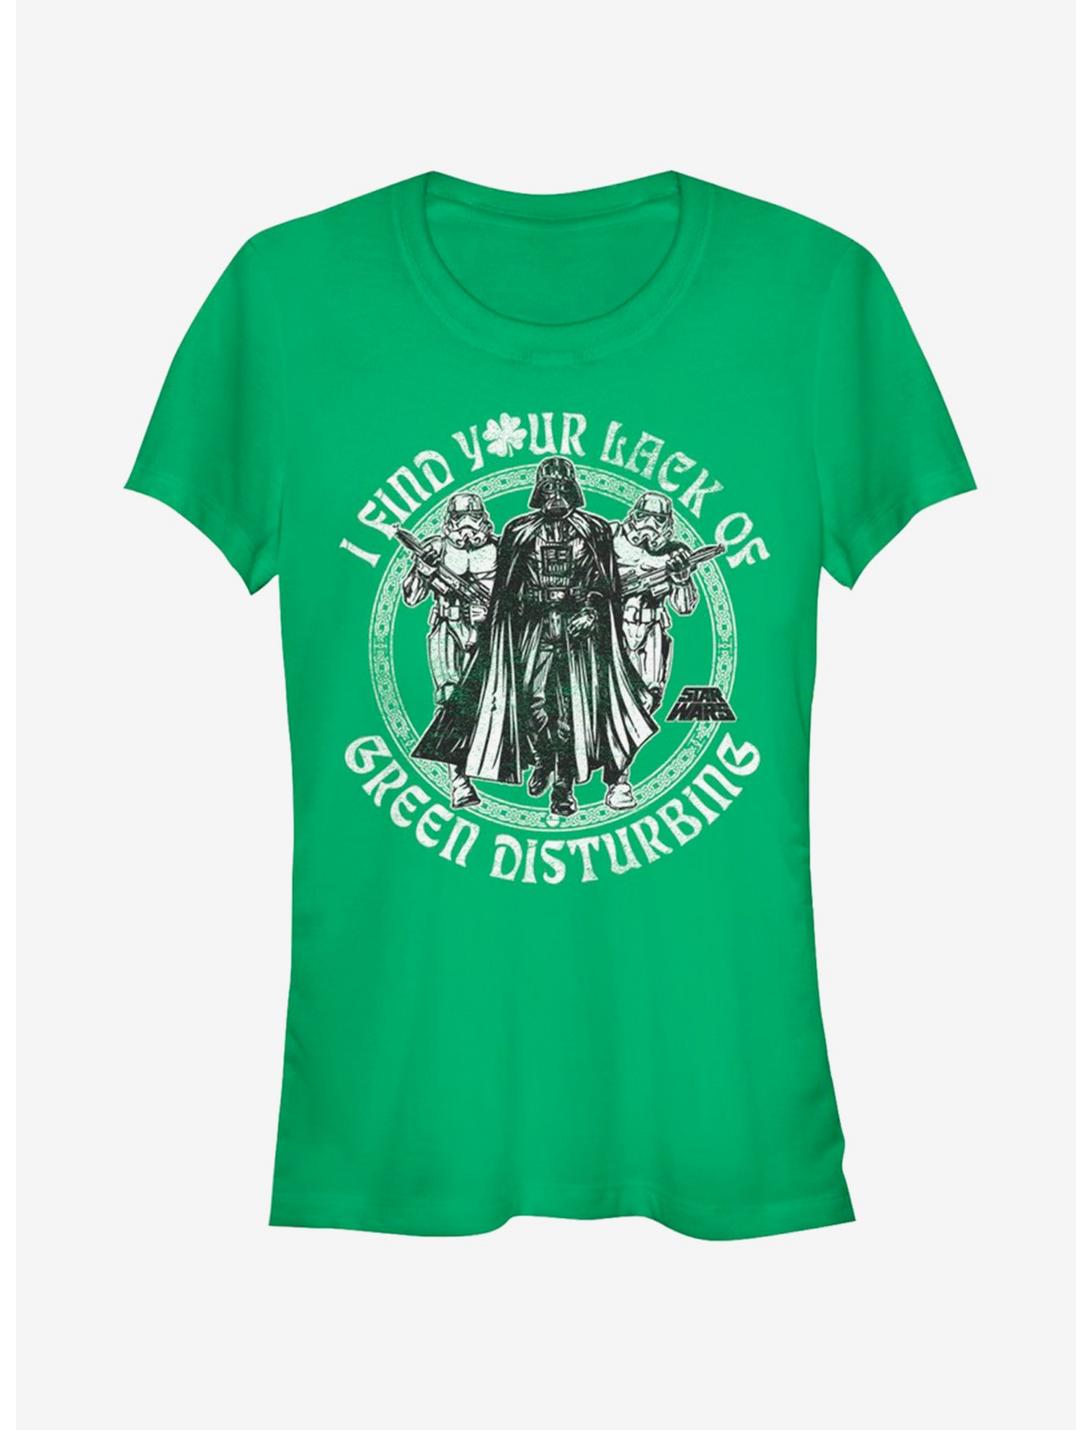 Lucasfilm Star Wars Green Disturbing Girls T-Shirt, KELLY, hi-res